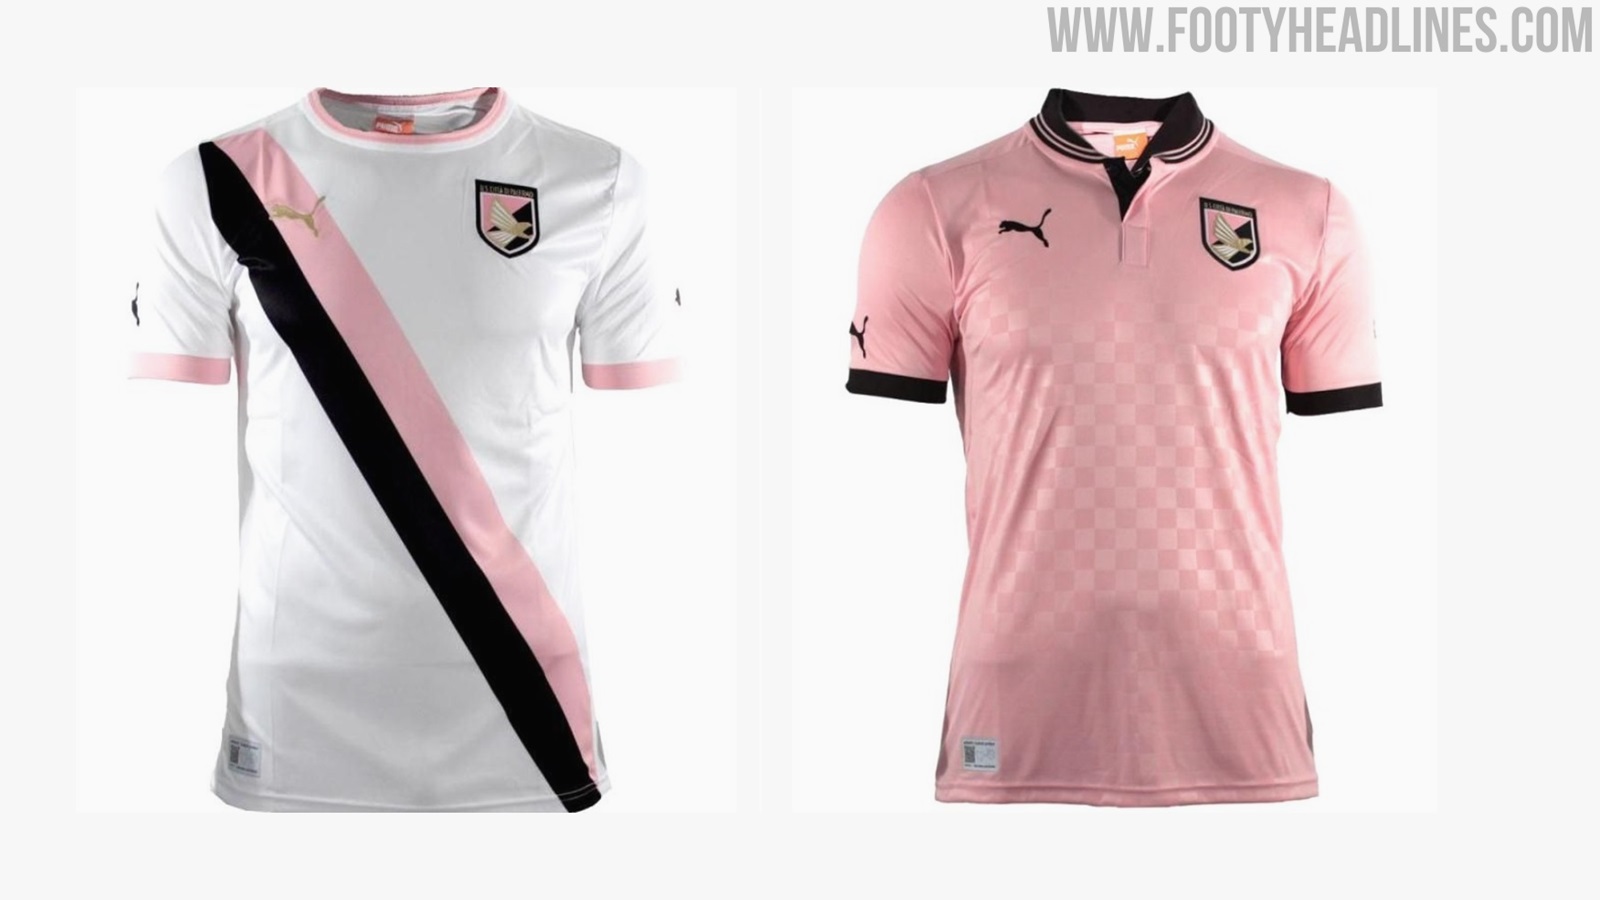 Palermo Return to Puma - Footy Headlines